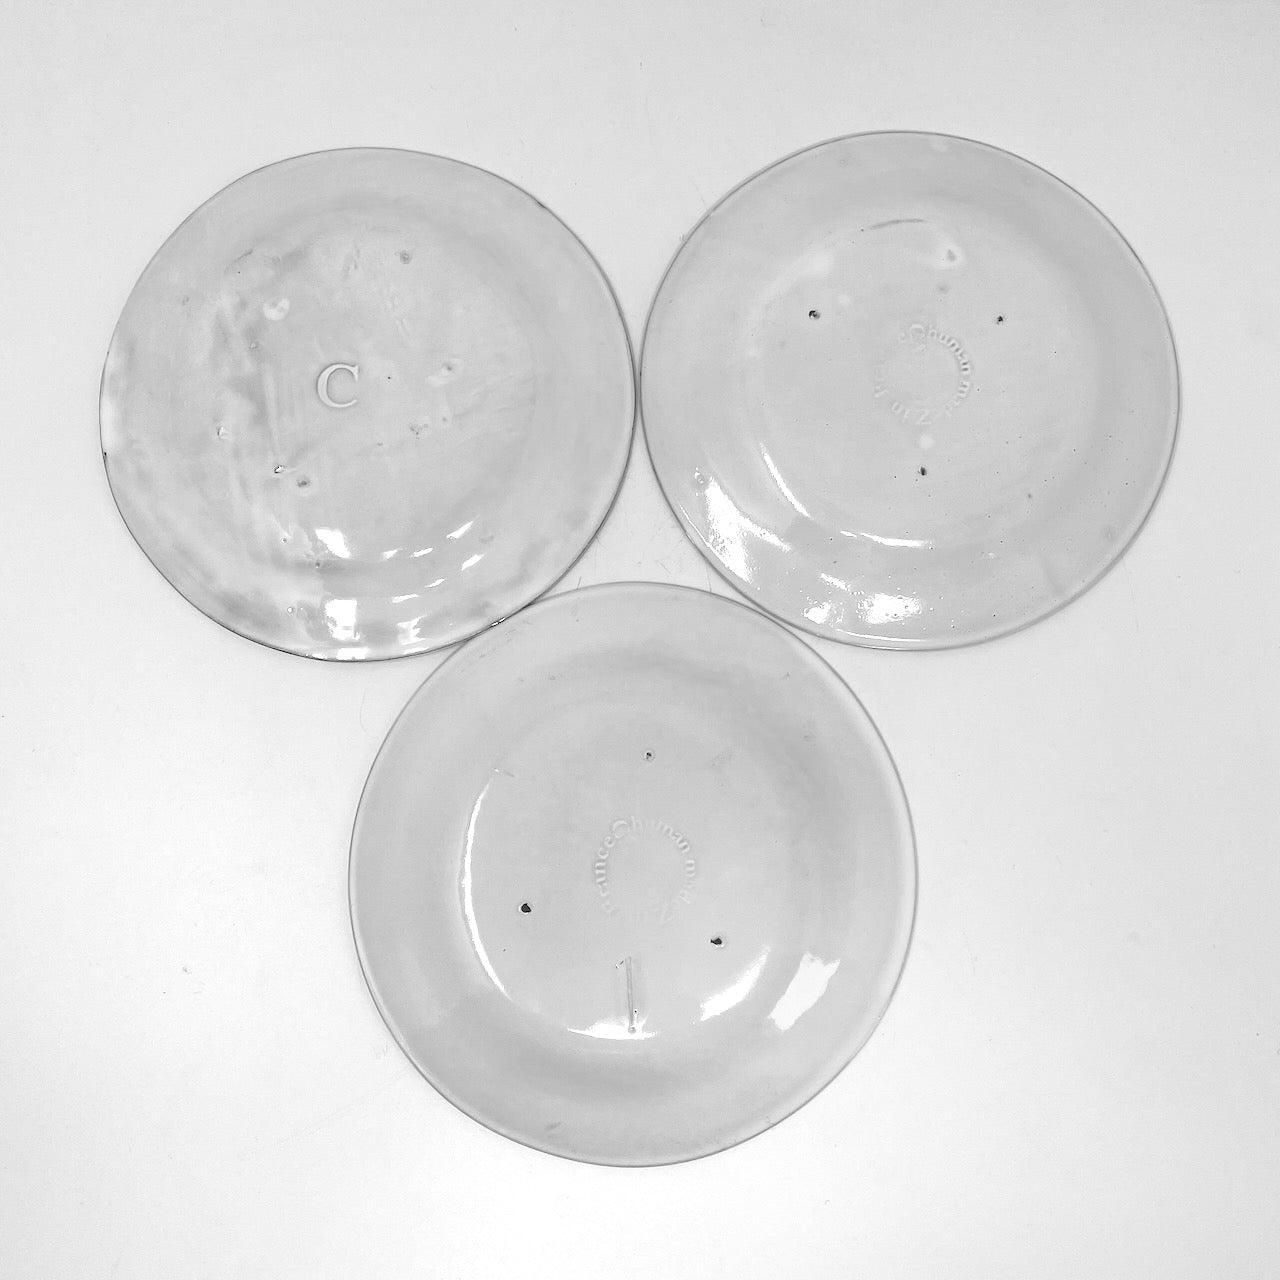 3 x Moon plates